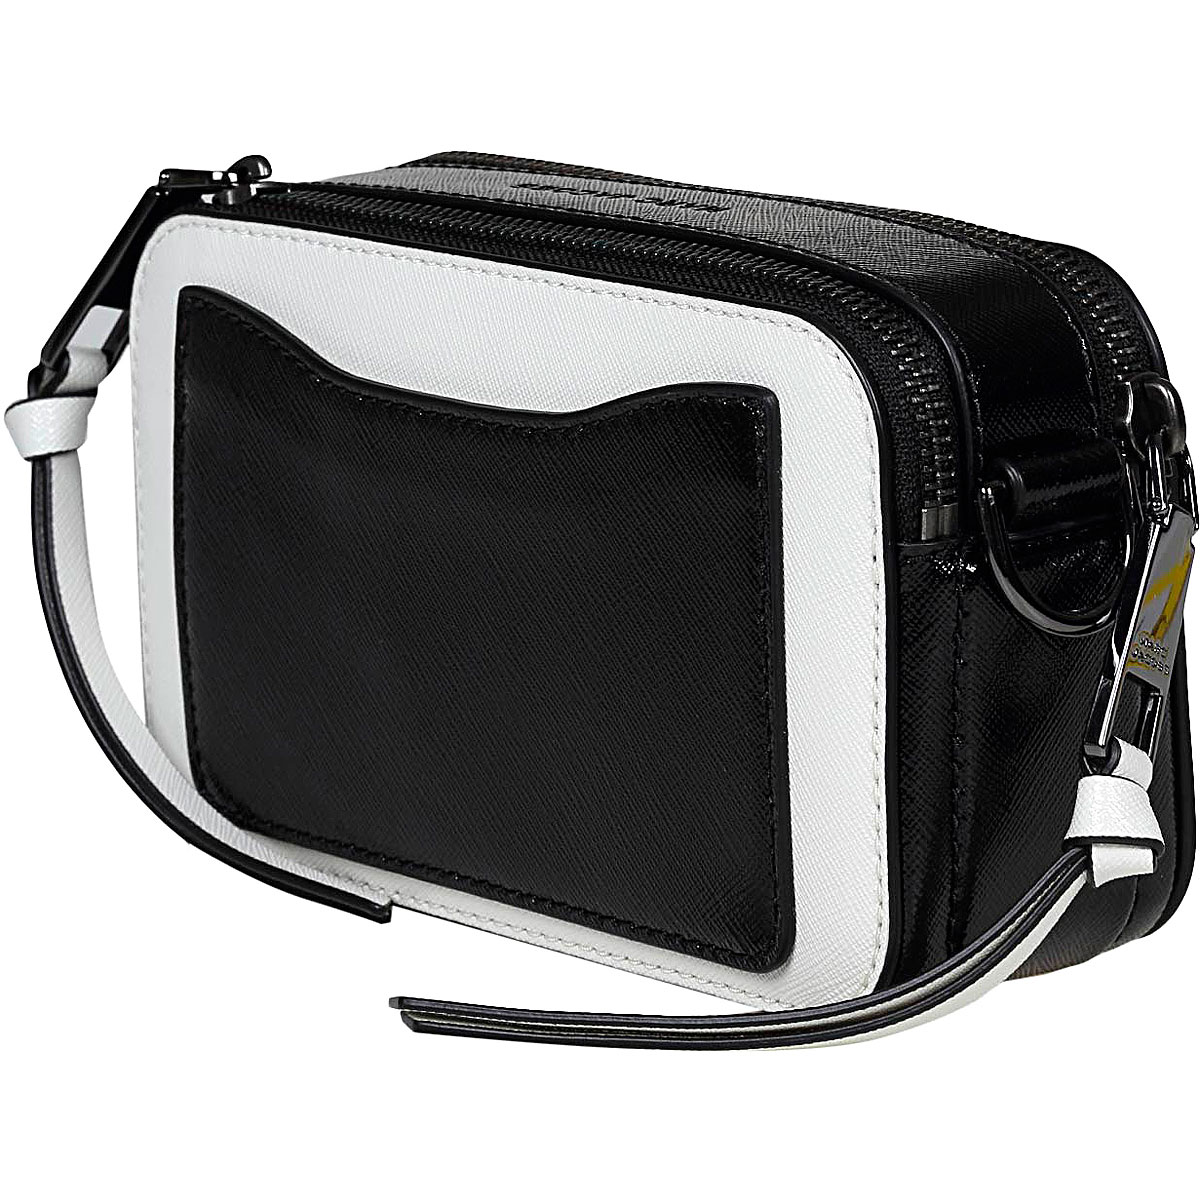 Marc Jacobs The Snapshot - Crossbody bag for Woman - White - 2P3HCR005H01